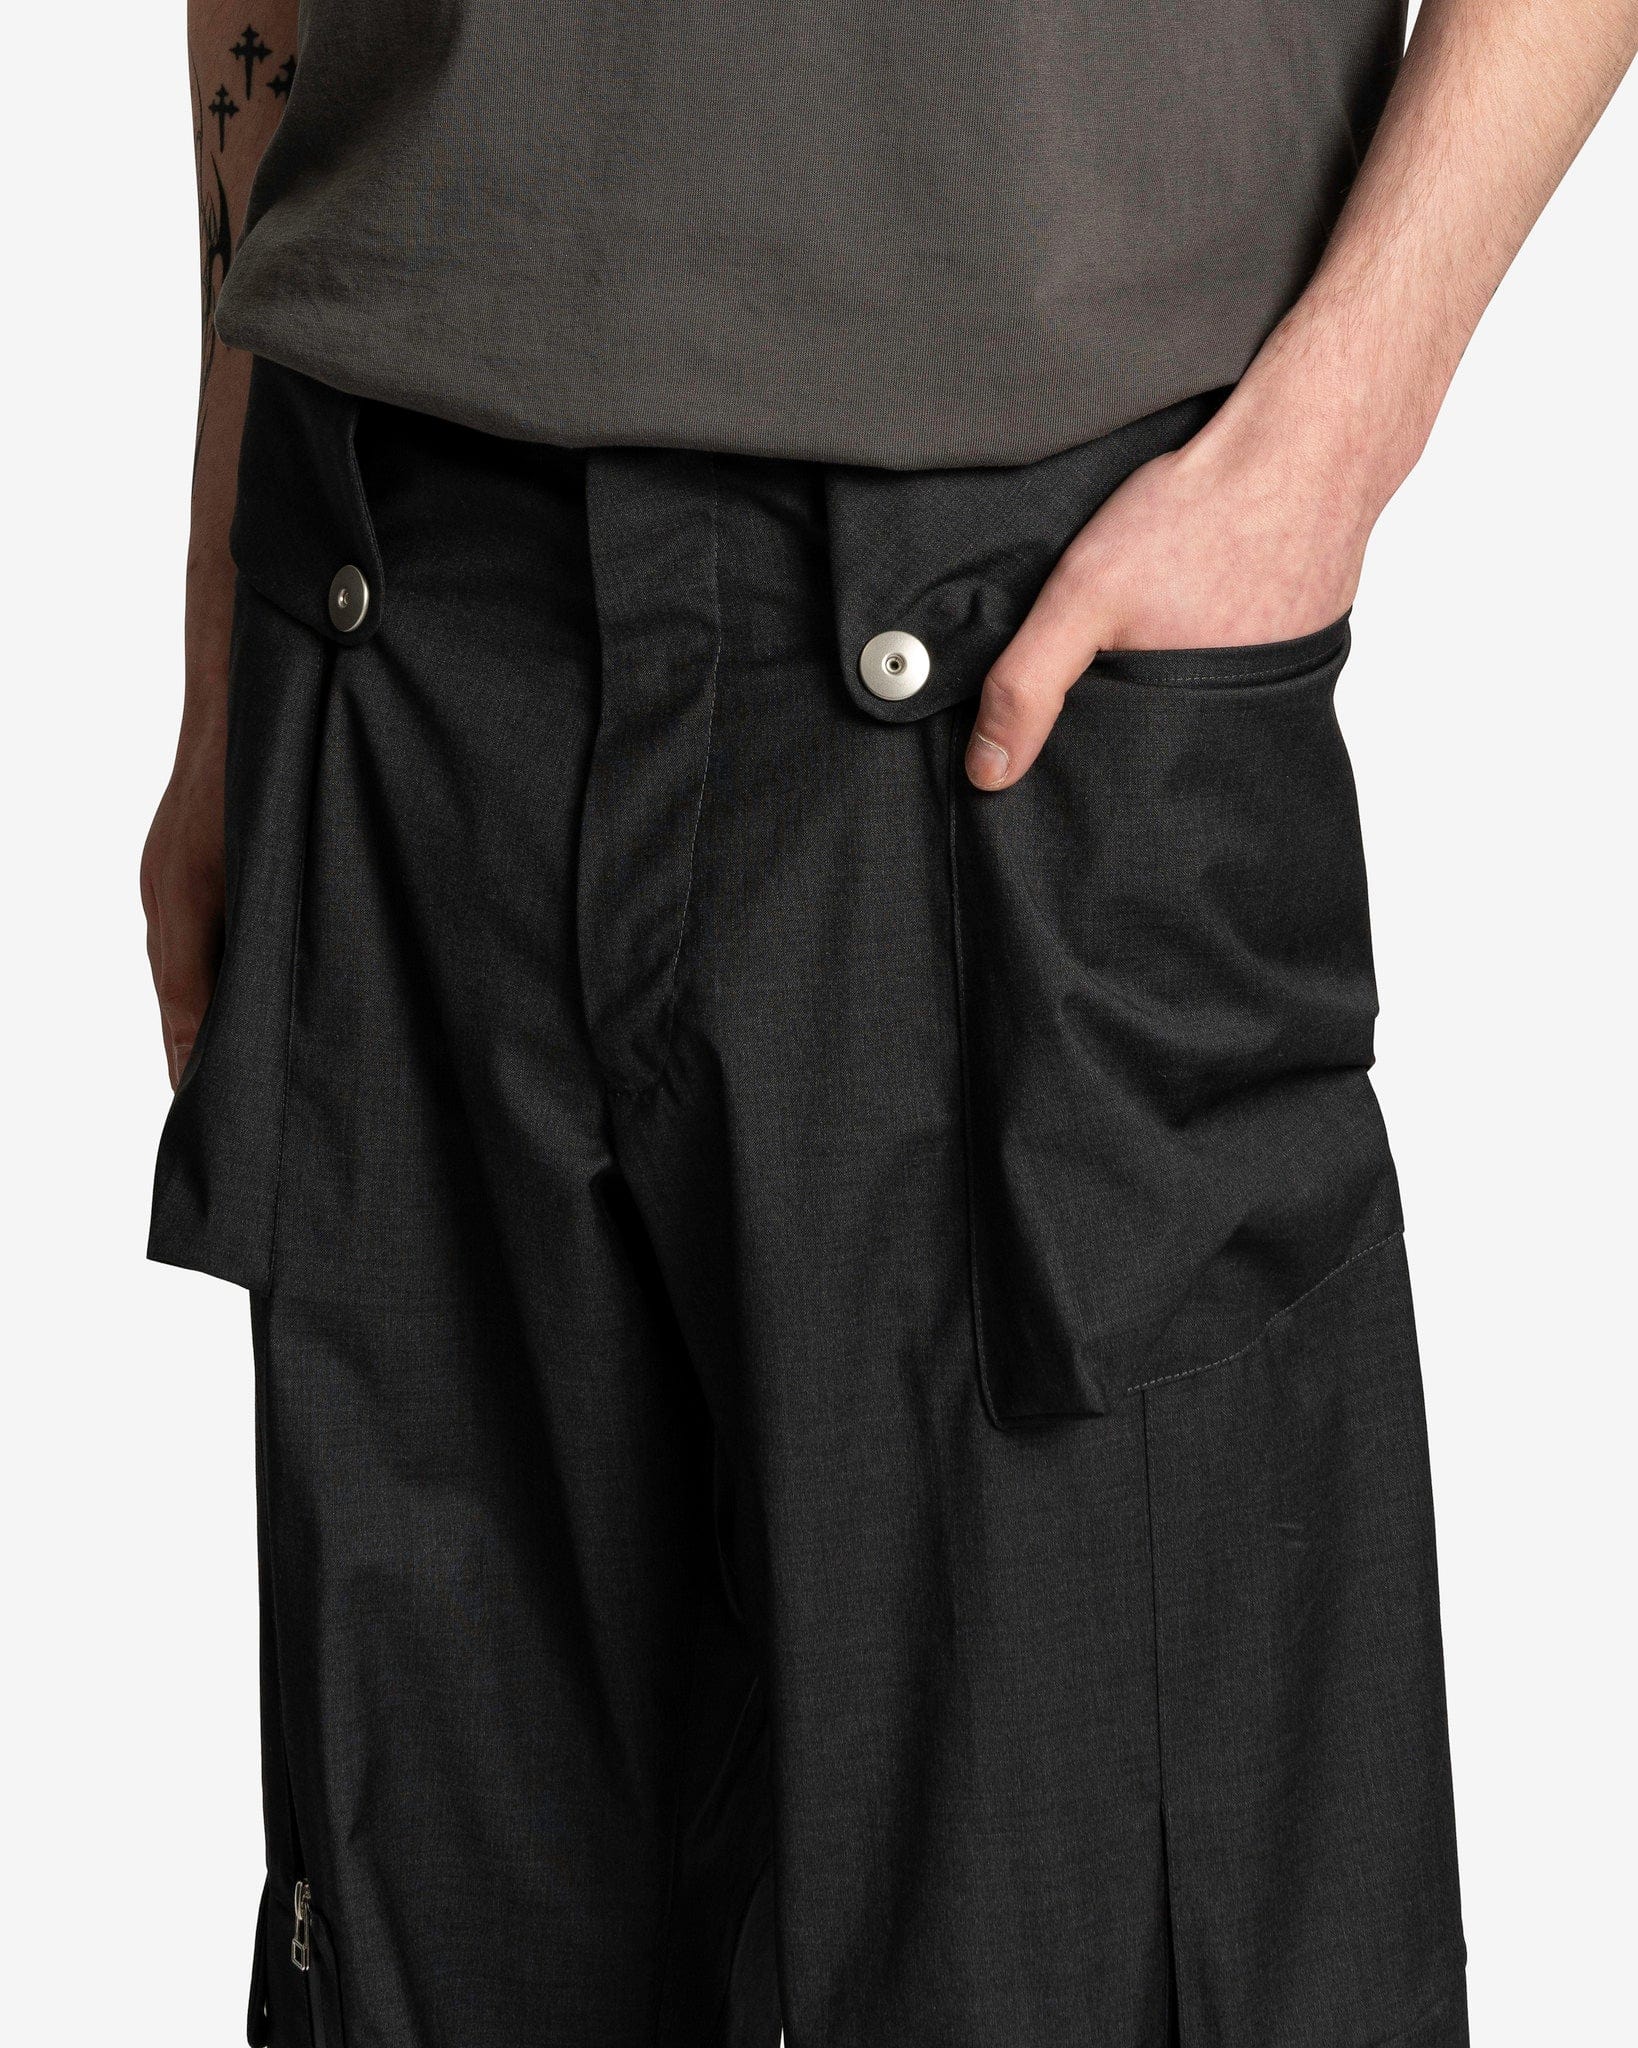 Totem Cargo Trousers in Dark Grey